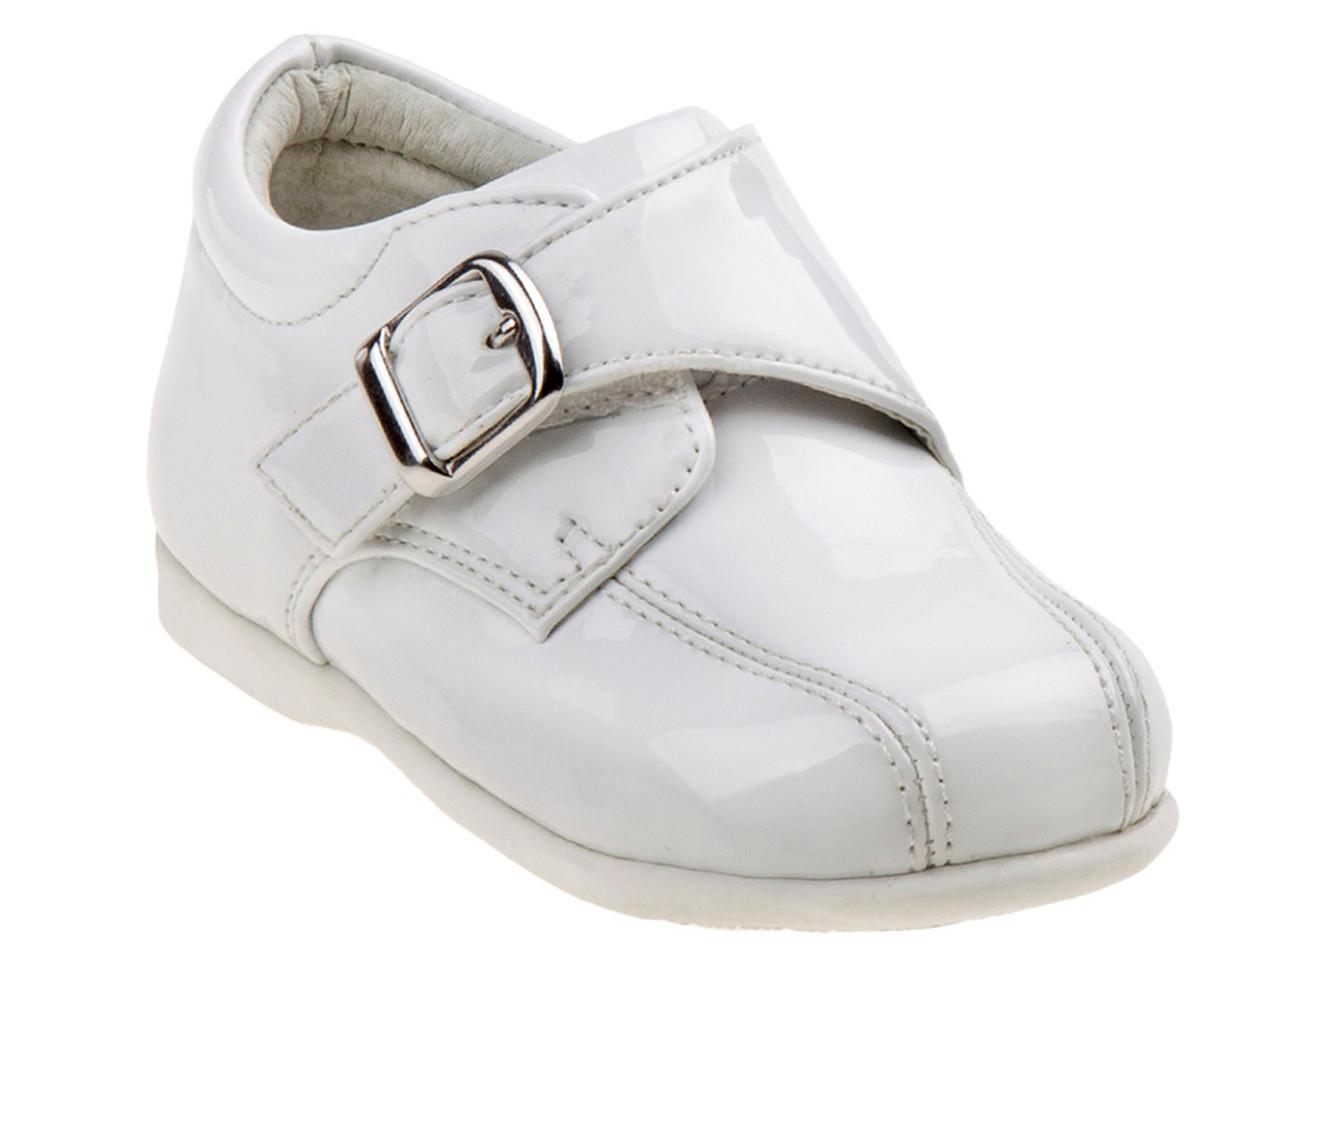 Boys' Josmo Infant & Toddler Buckleboys Dress Shoes